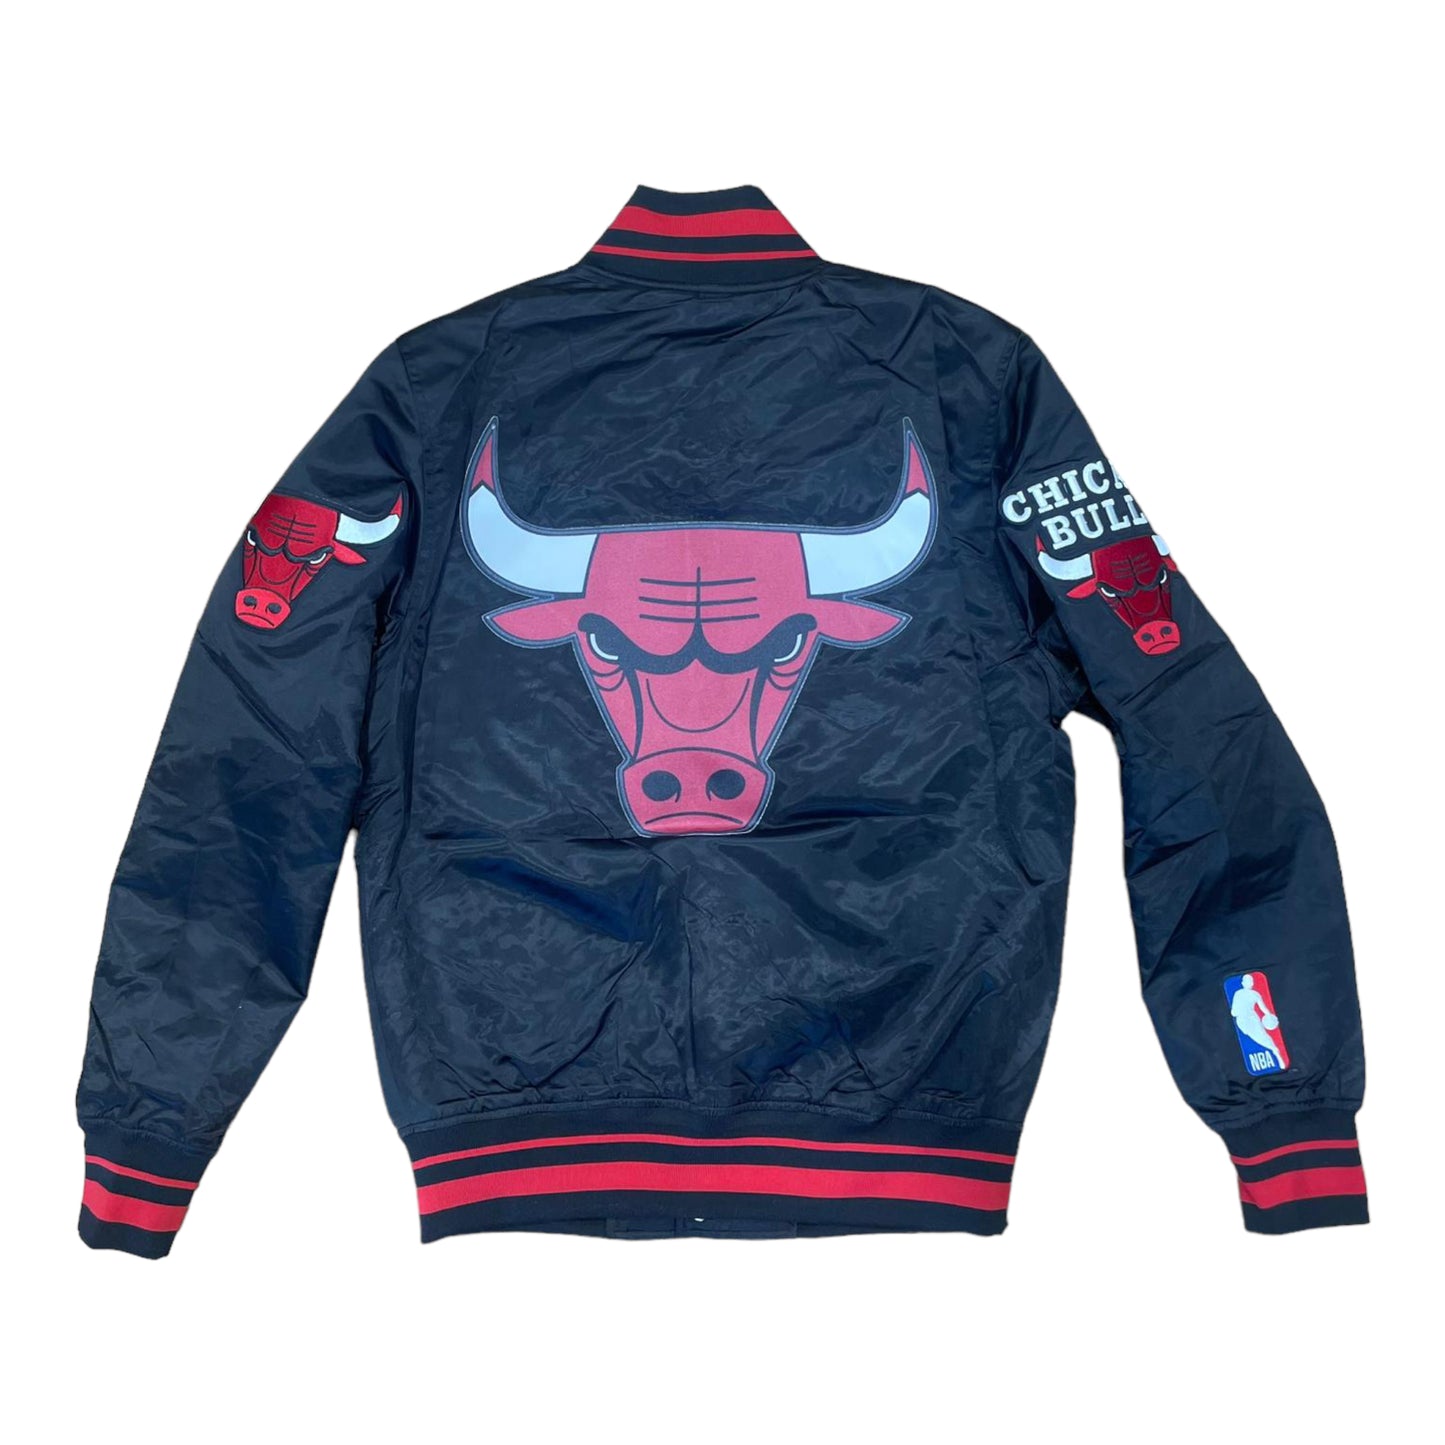 PRO STANDARD: Bulls Chi Town Satin Jacket